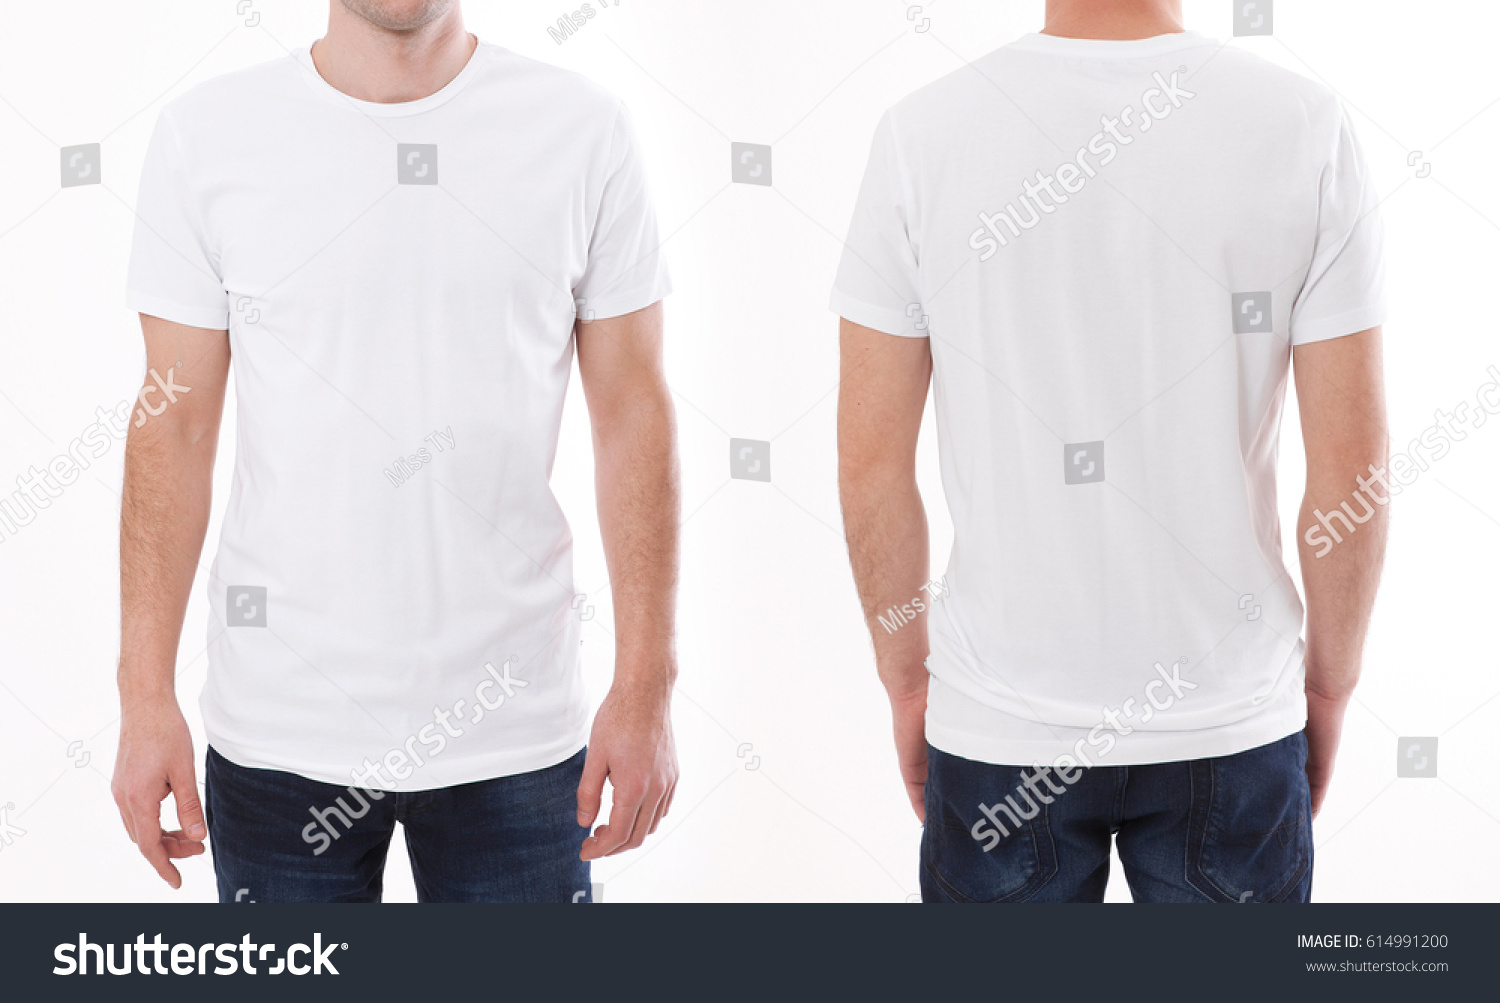 963,882 White shirt model Images, Stock Photos & Vectors | Shutterstock